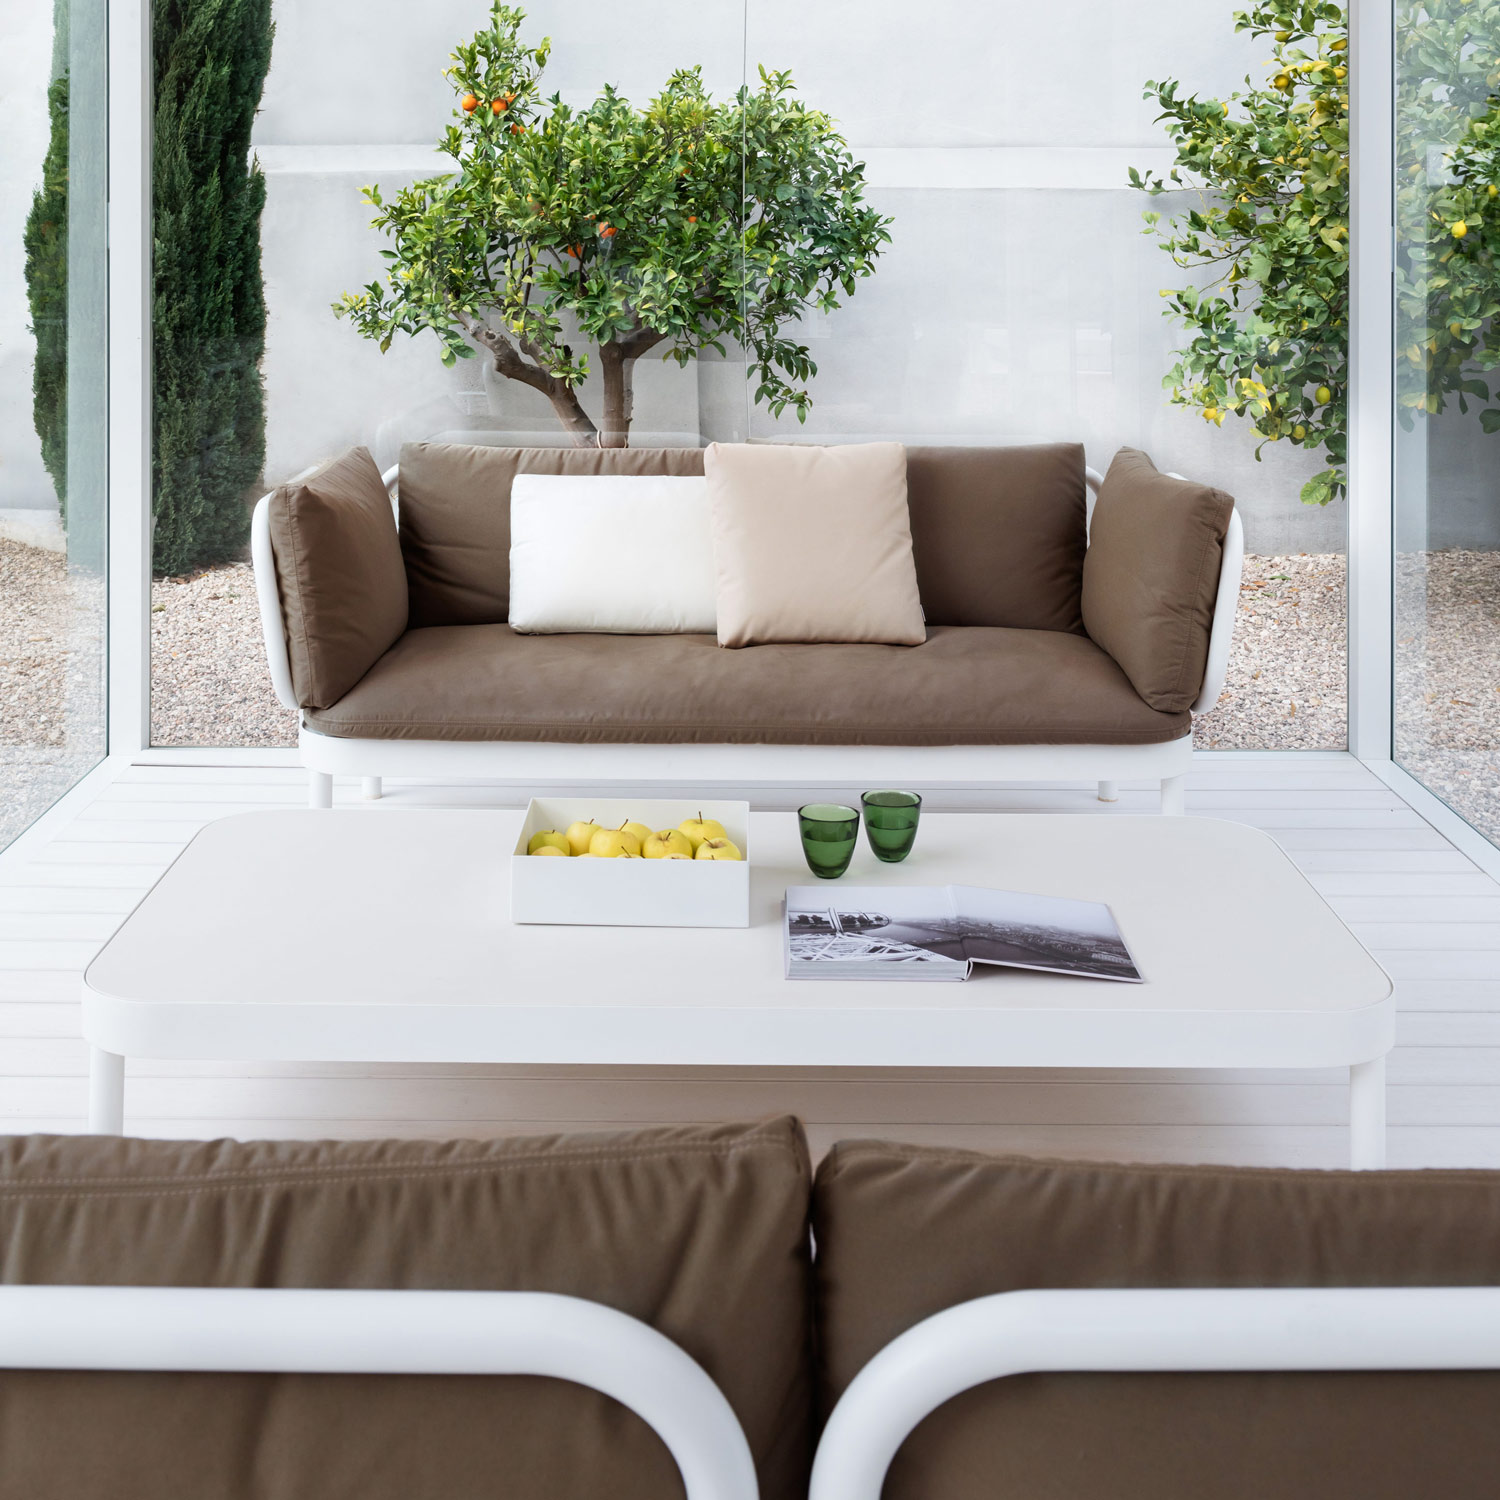 Tropez luksus havemøbler i elegante farver til både stel og hynder fra Gitz Design og Gandia Blasco